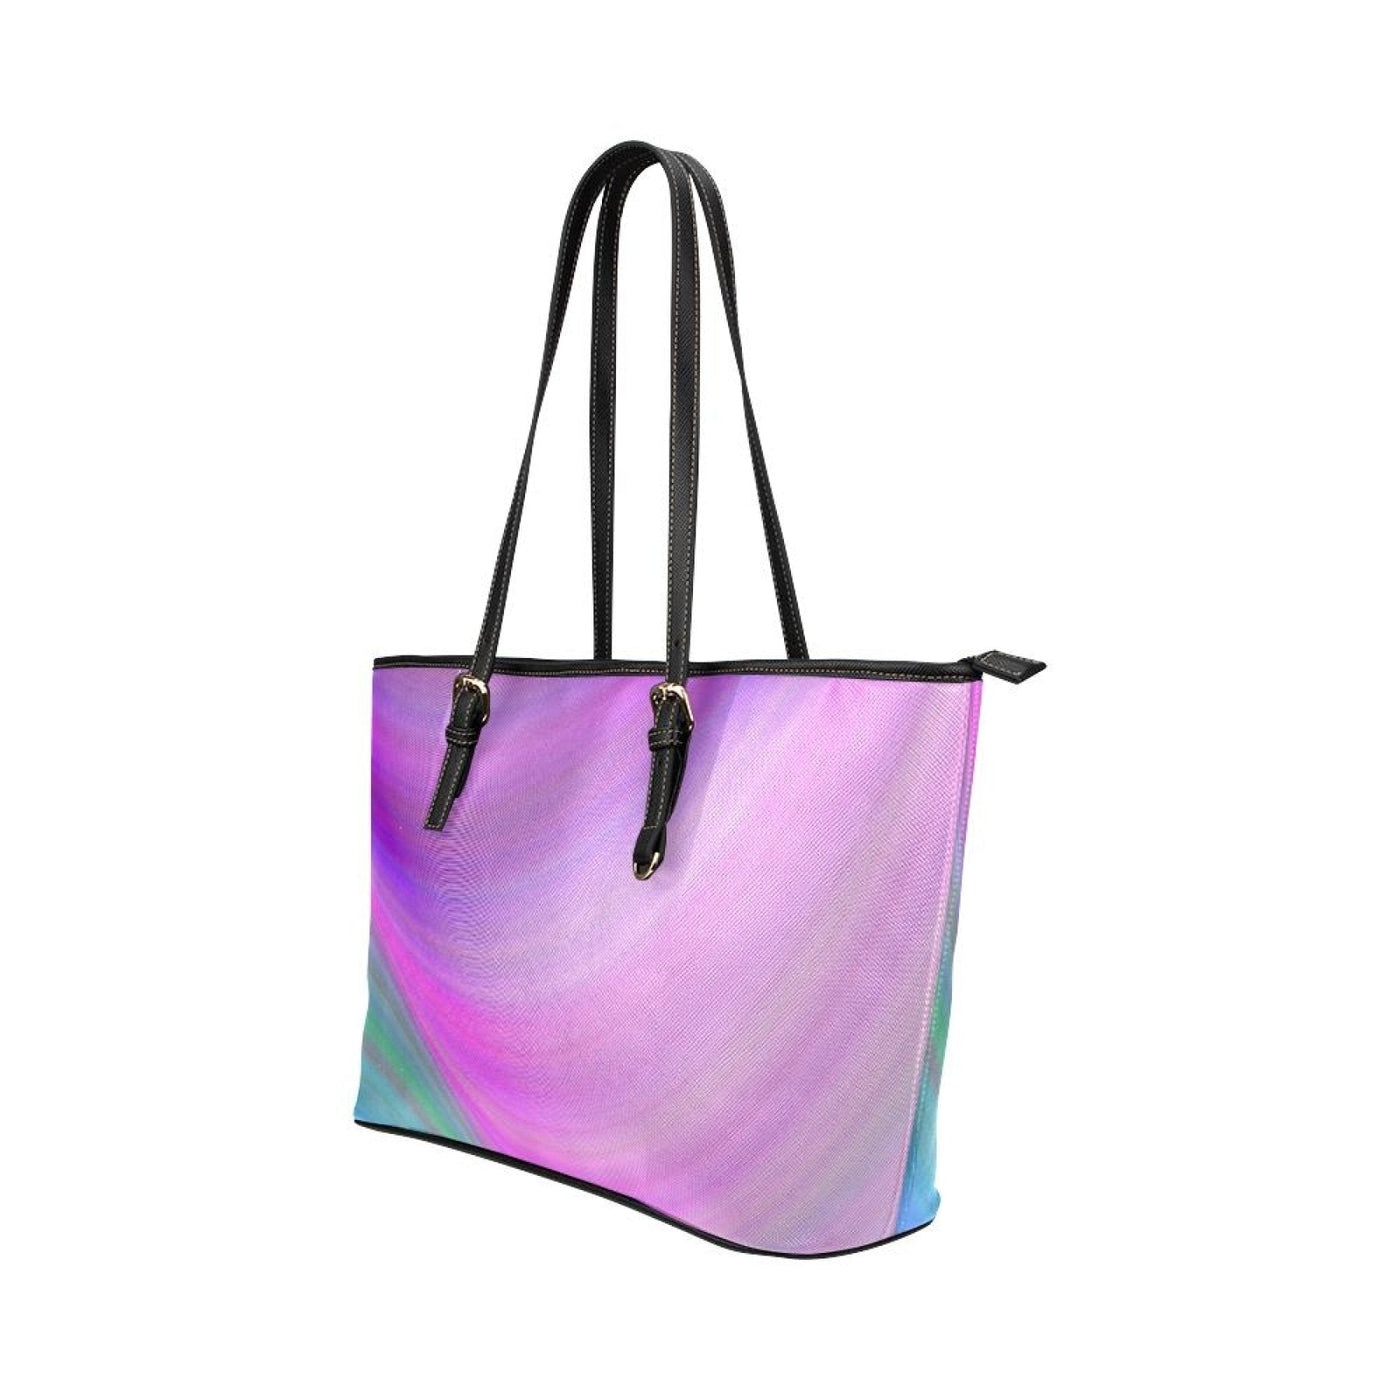 Large Leather Tote Shoulder Bag - Pink And Blue Gradient Handbag B75744 - Bags |